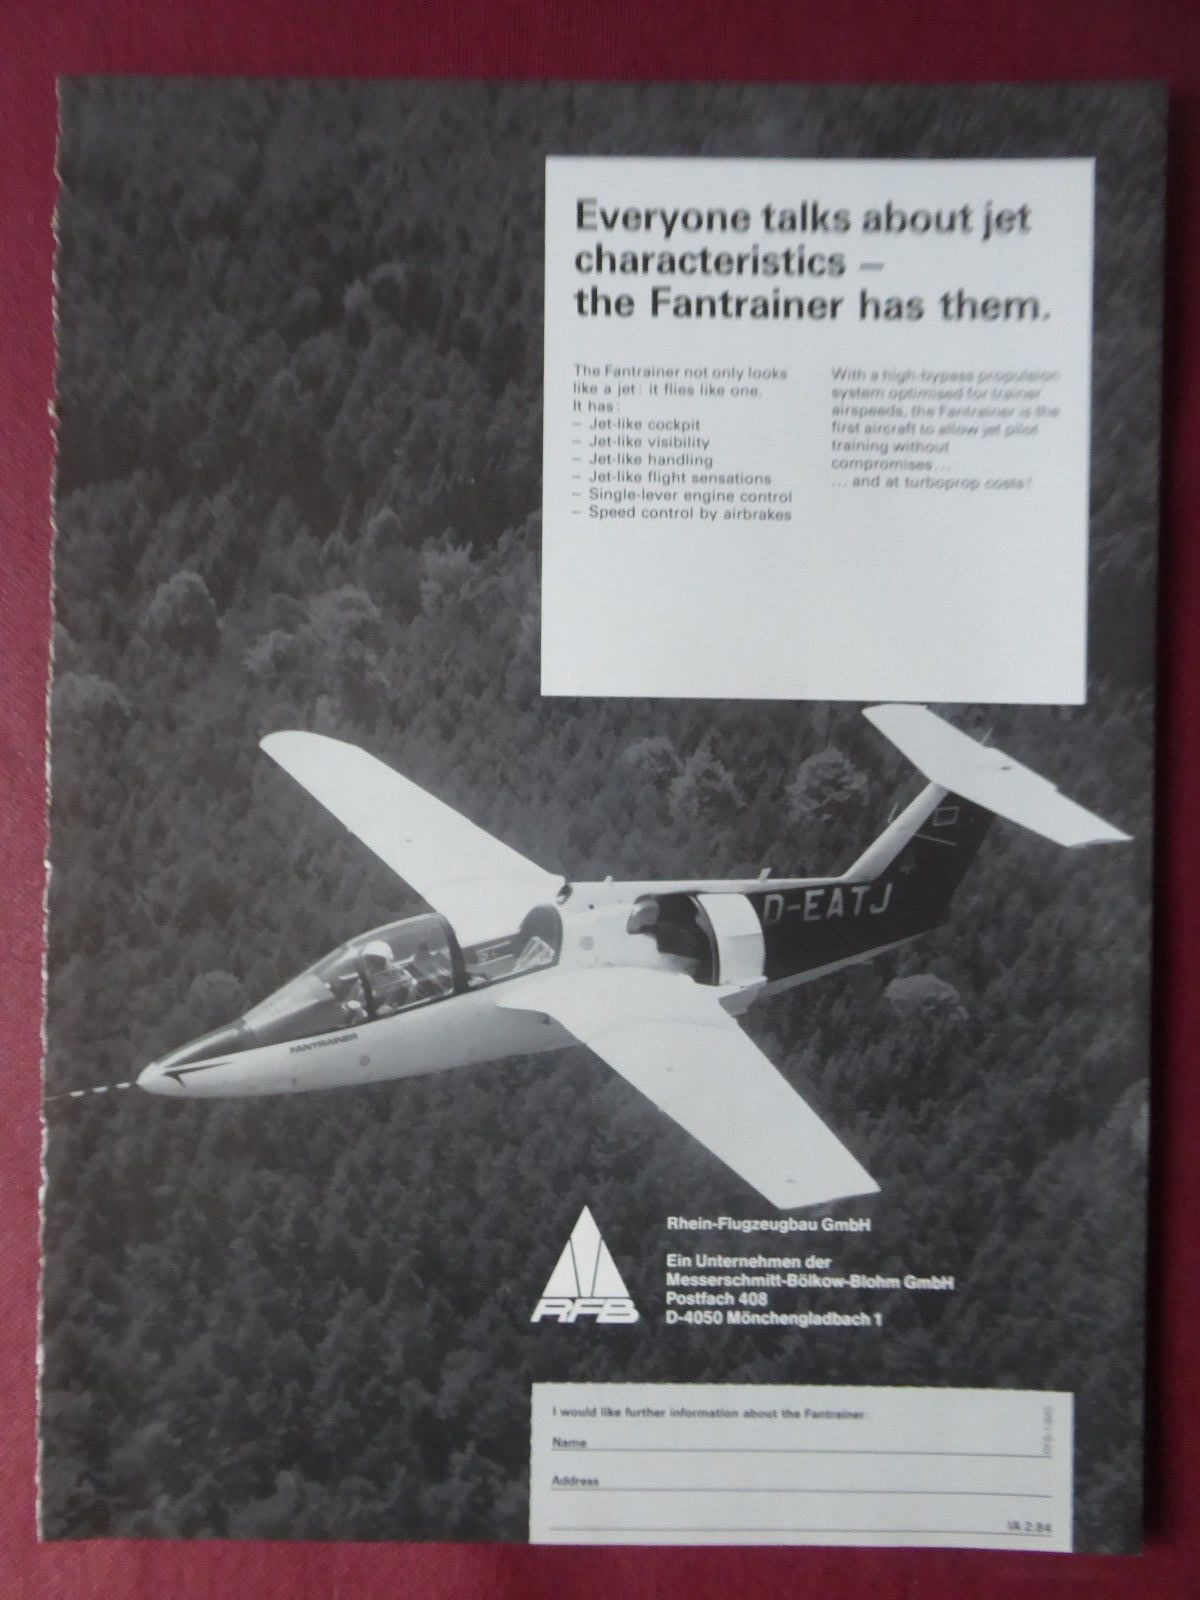 2/1984 PUB RFB RHEIN AIRCRAFT BUILDING FAN TRAINER D-EATJ TRAINER AIRCRAFT ORIGINAL AD